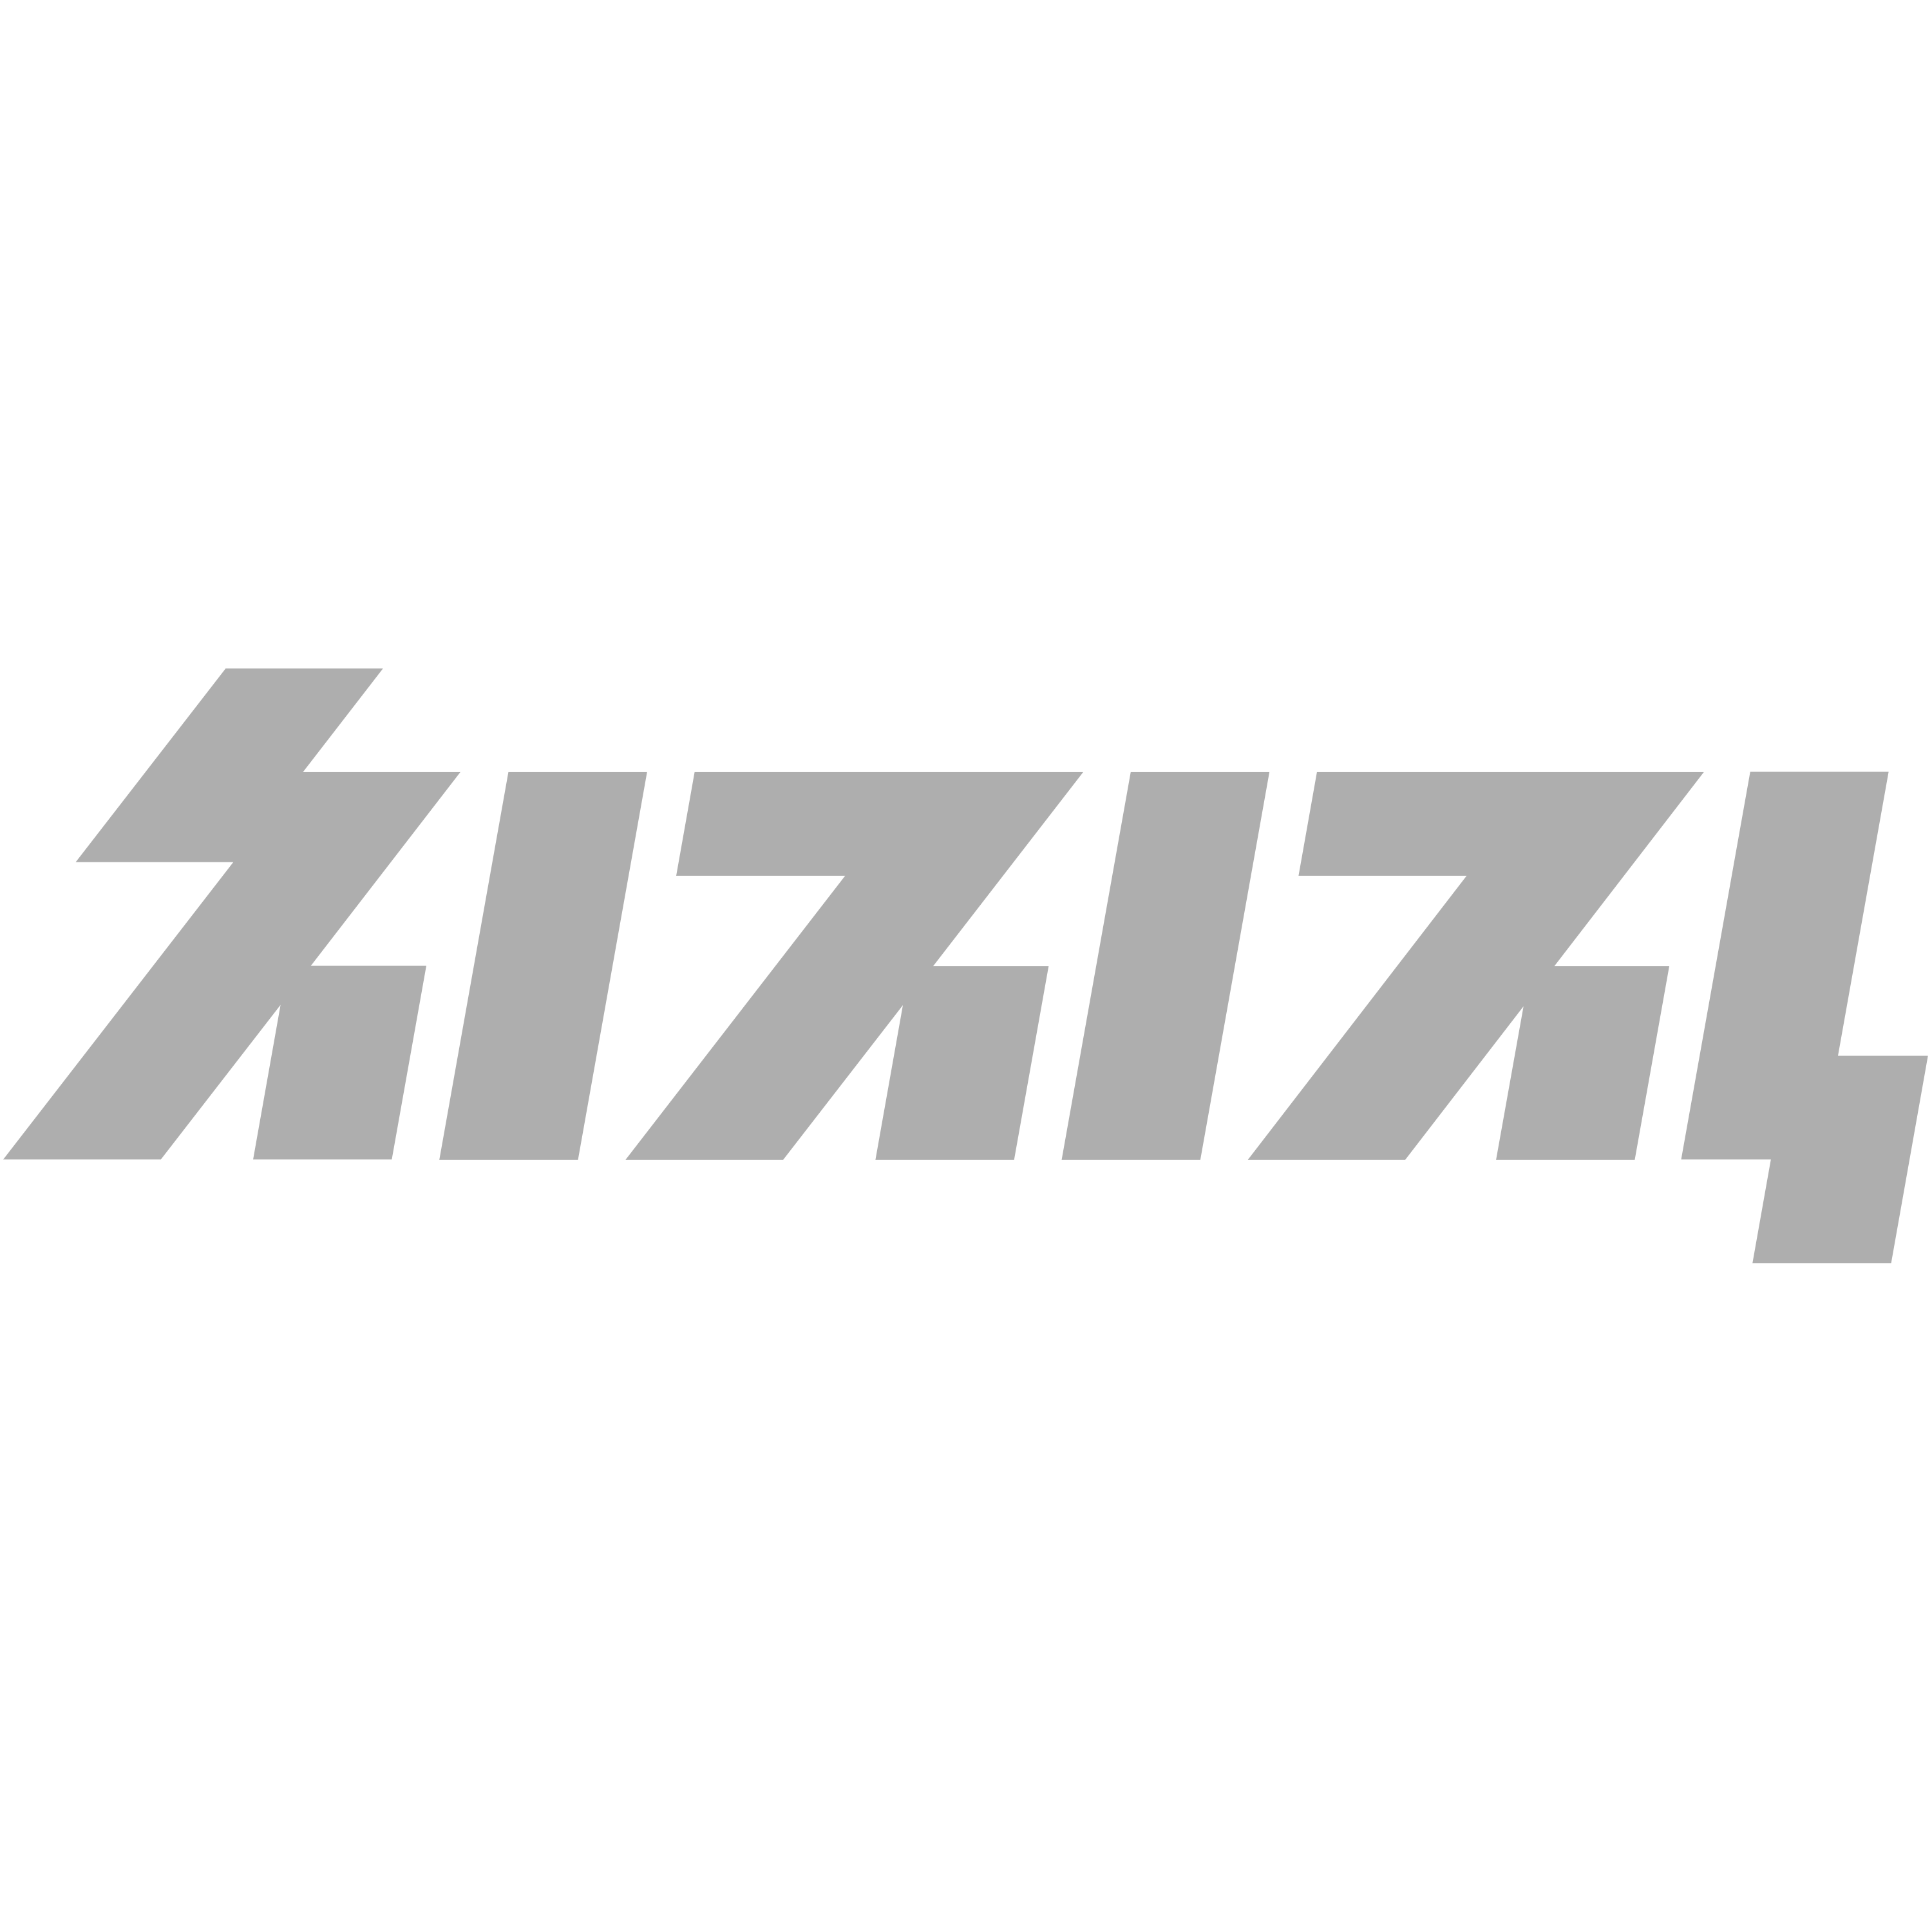 Chzzk Logo  Transparent Gallery